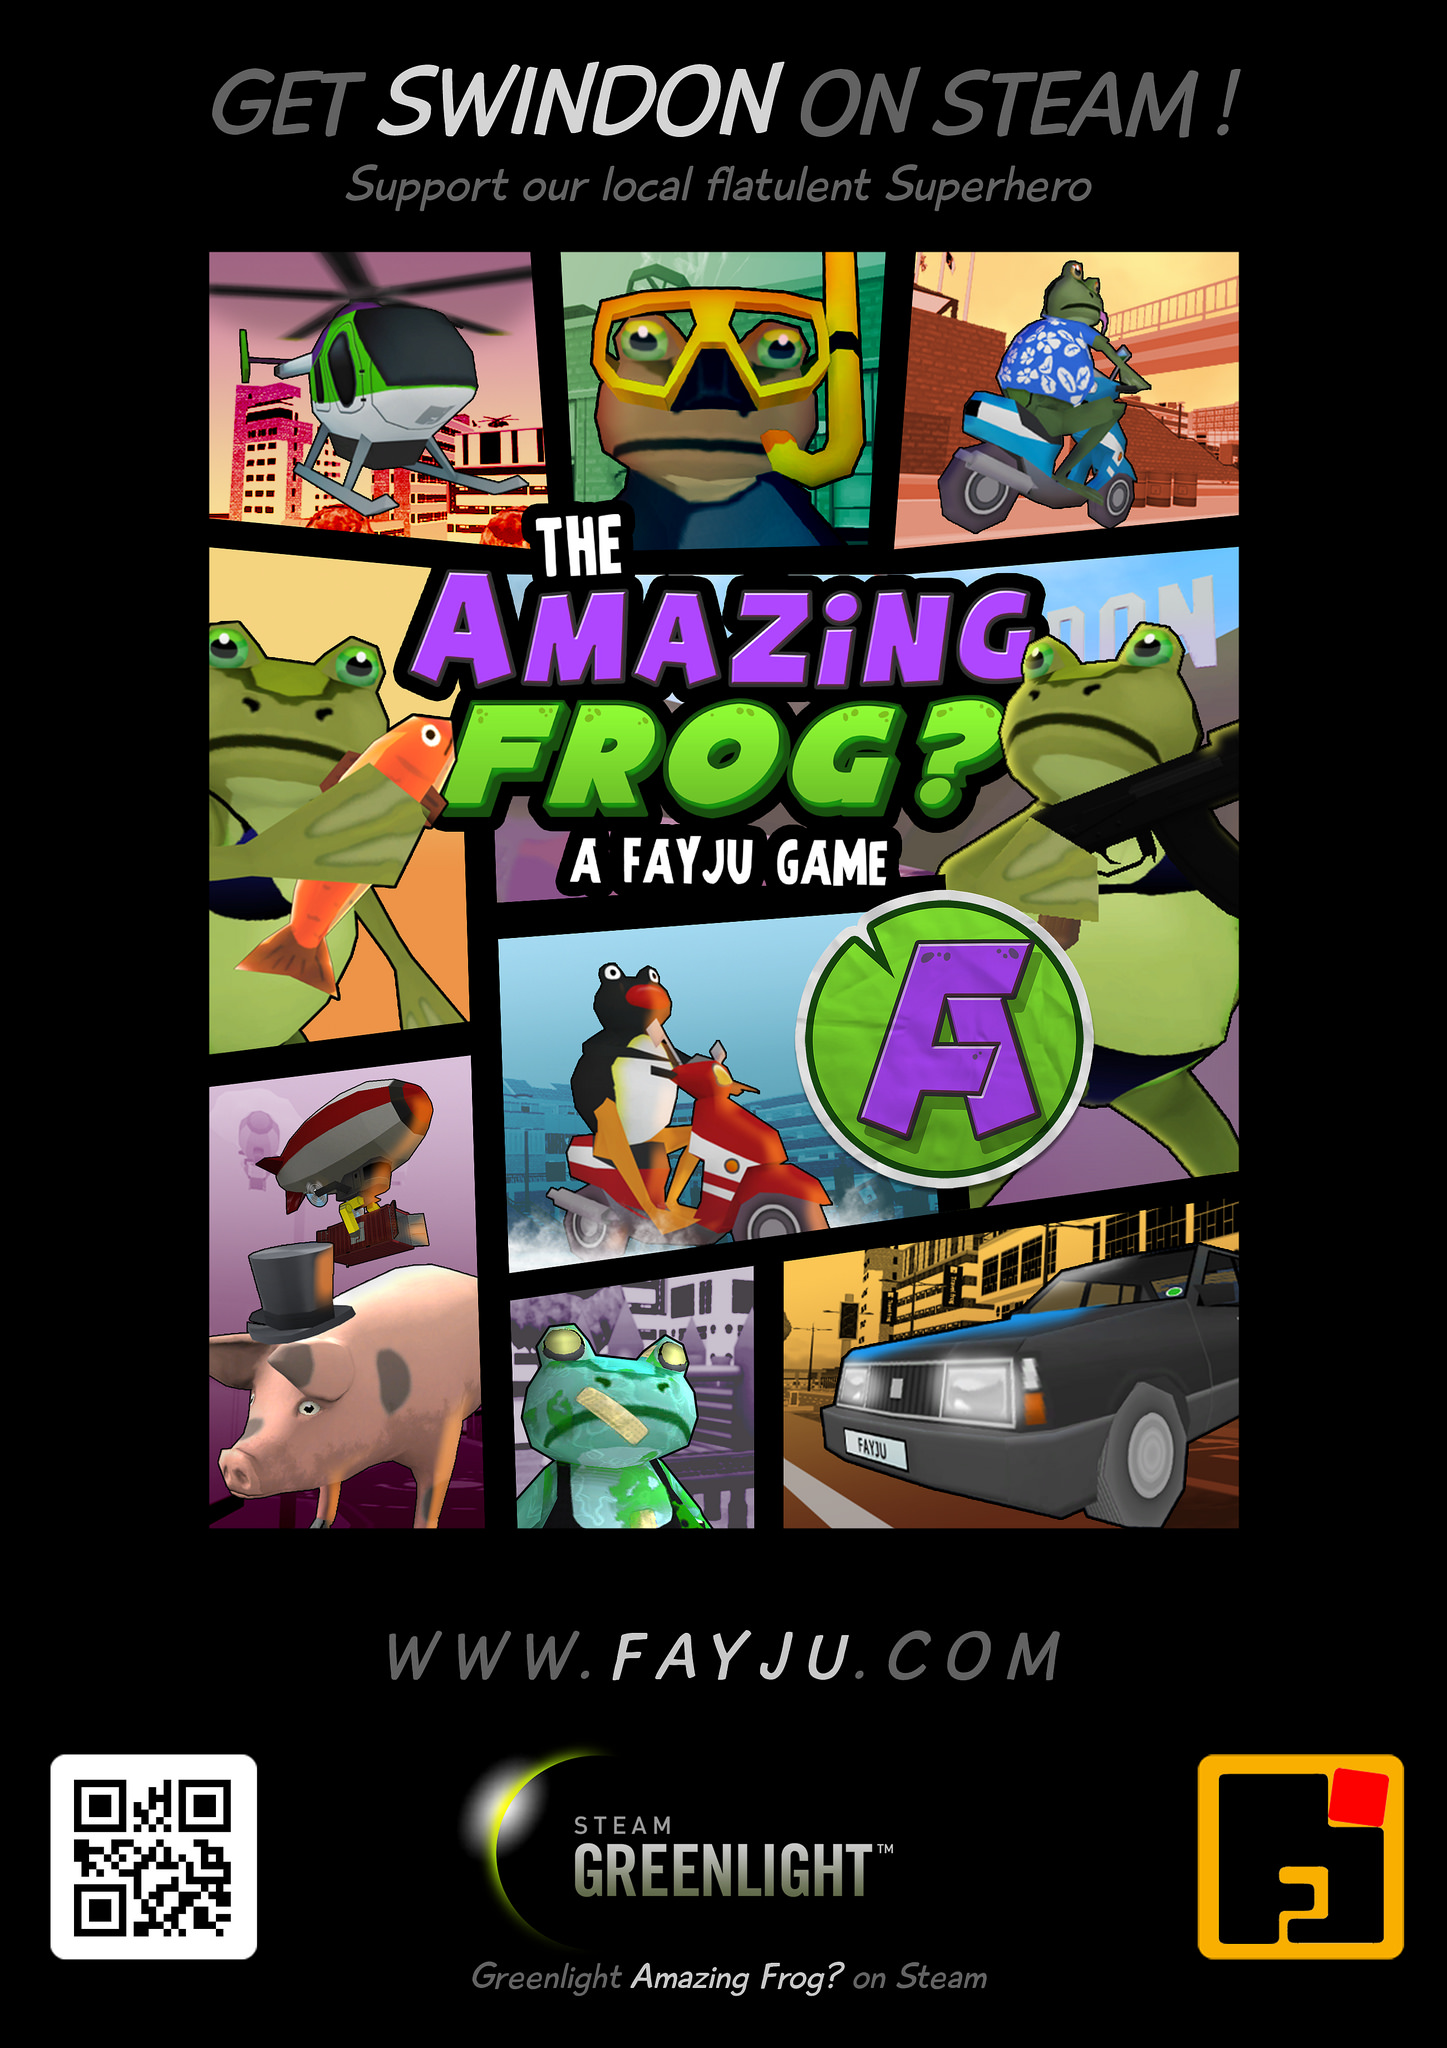 amazing frog game free download